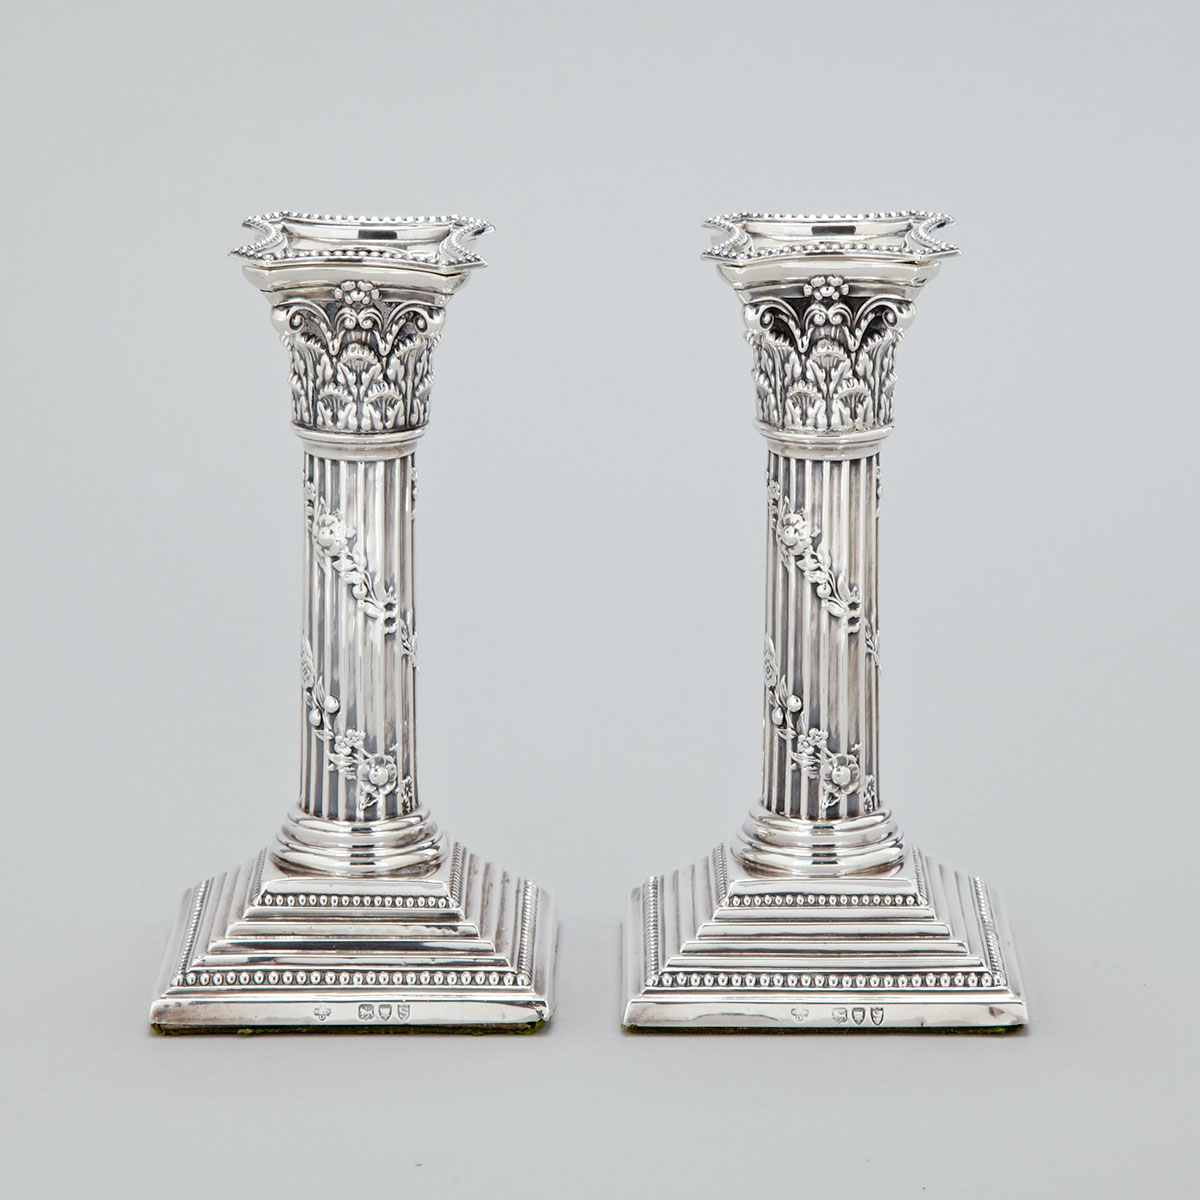 Pair of English Silver Corinthian Columnar Candlesticks, Horace Woodward & Co., London, 1893